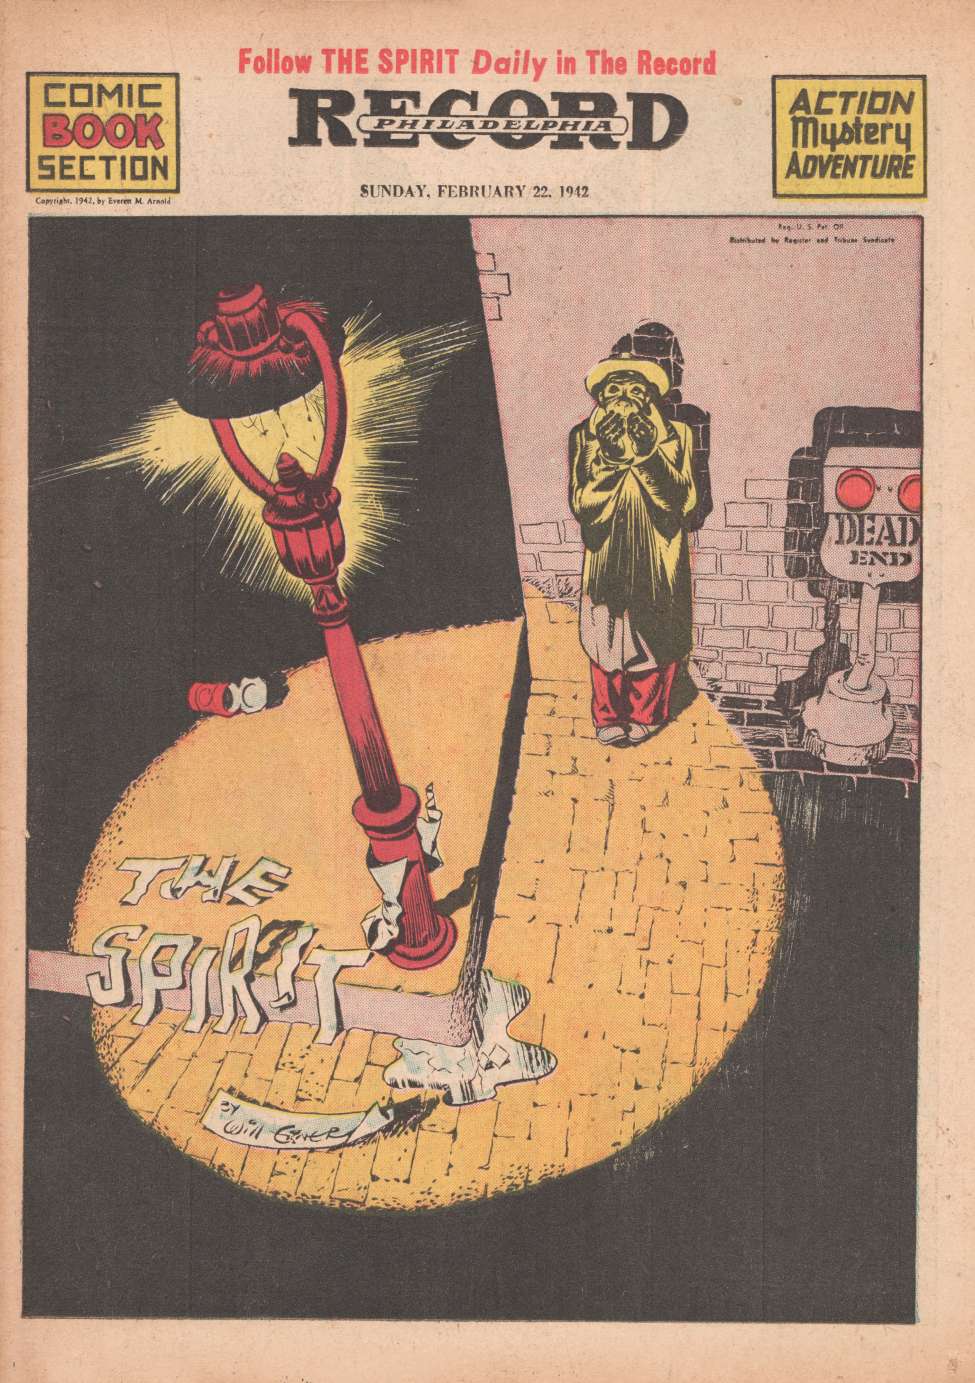 Comic Book Cover For The Spirit (1942-02-22) - Philadelphia Record - Version 1